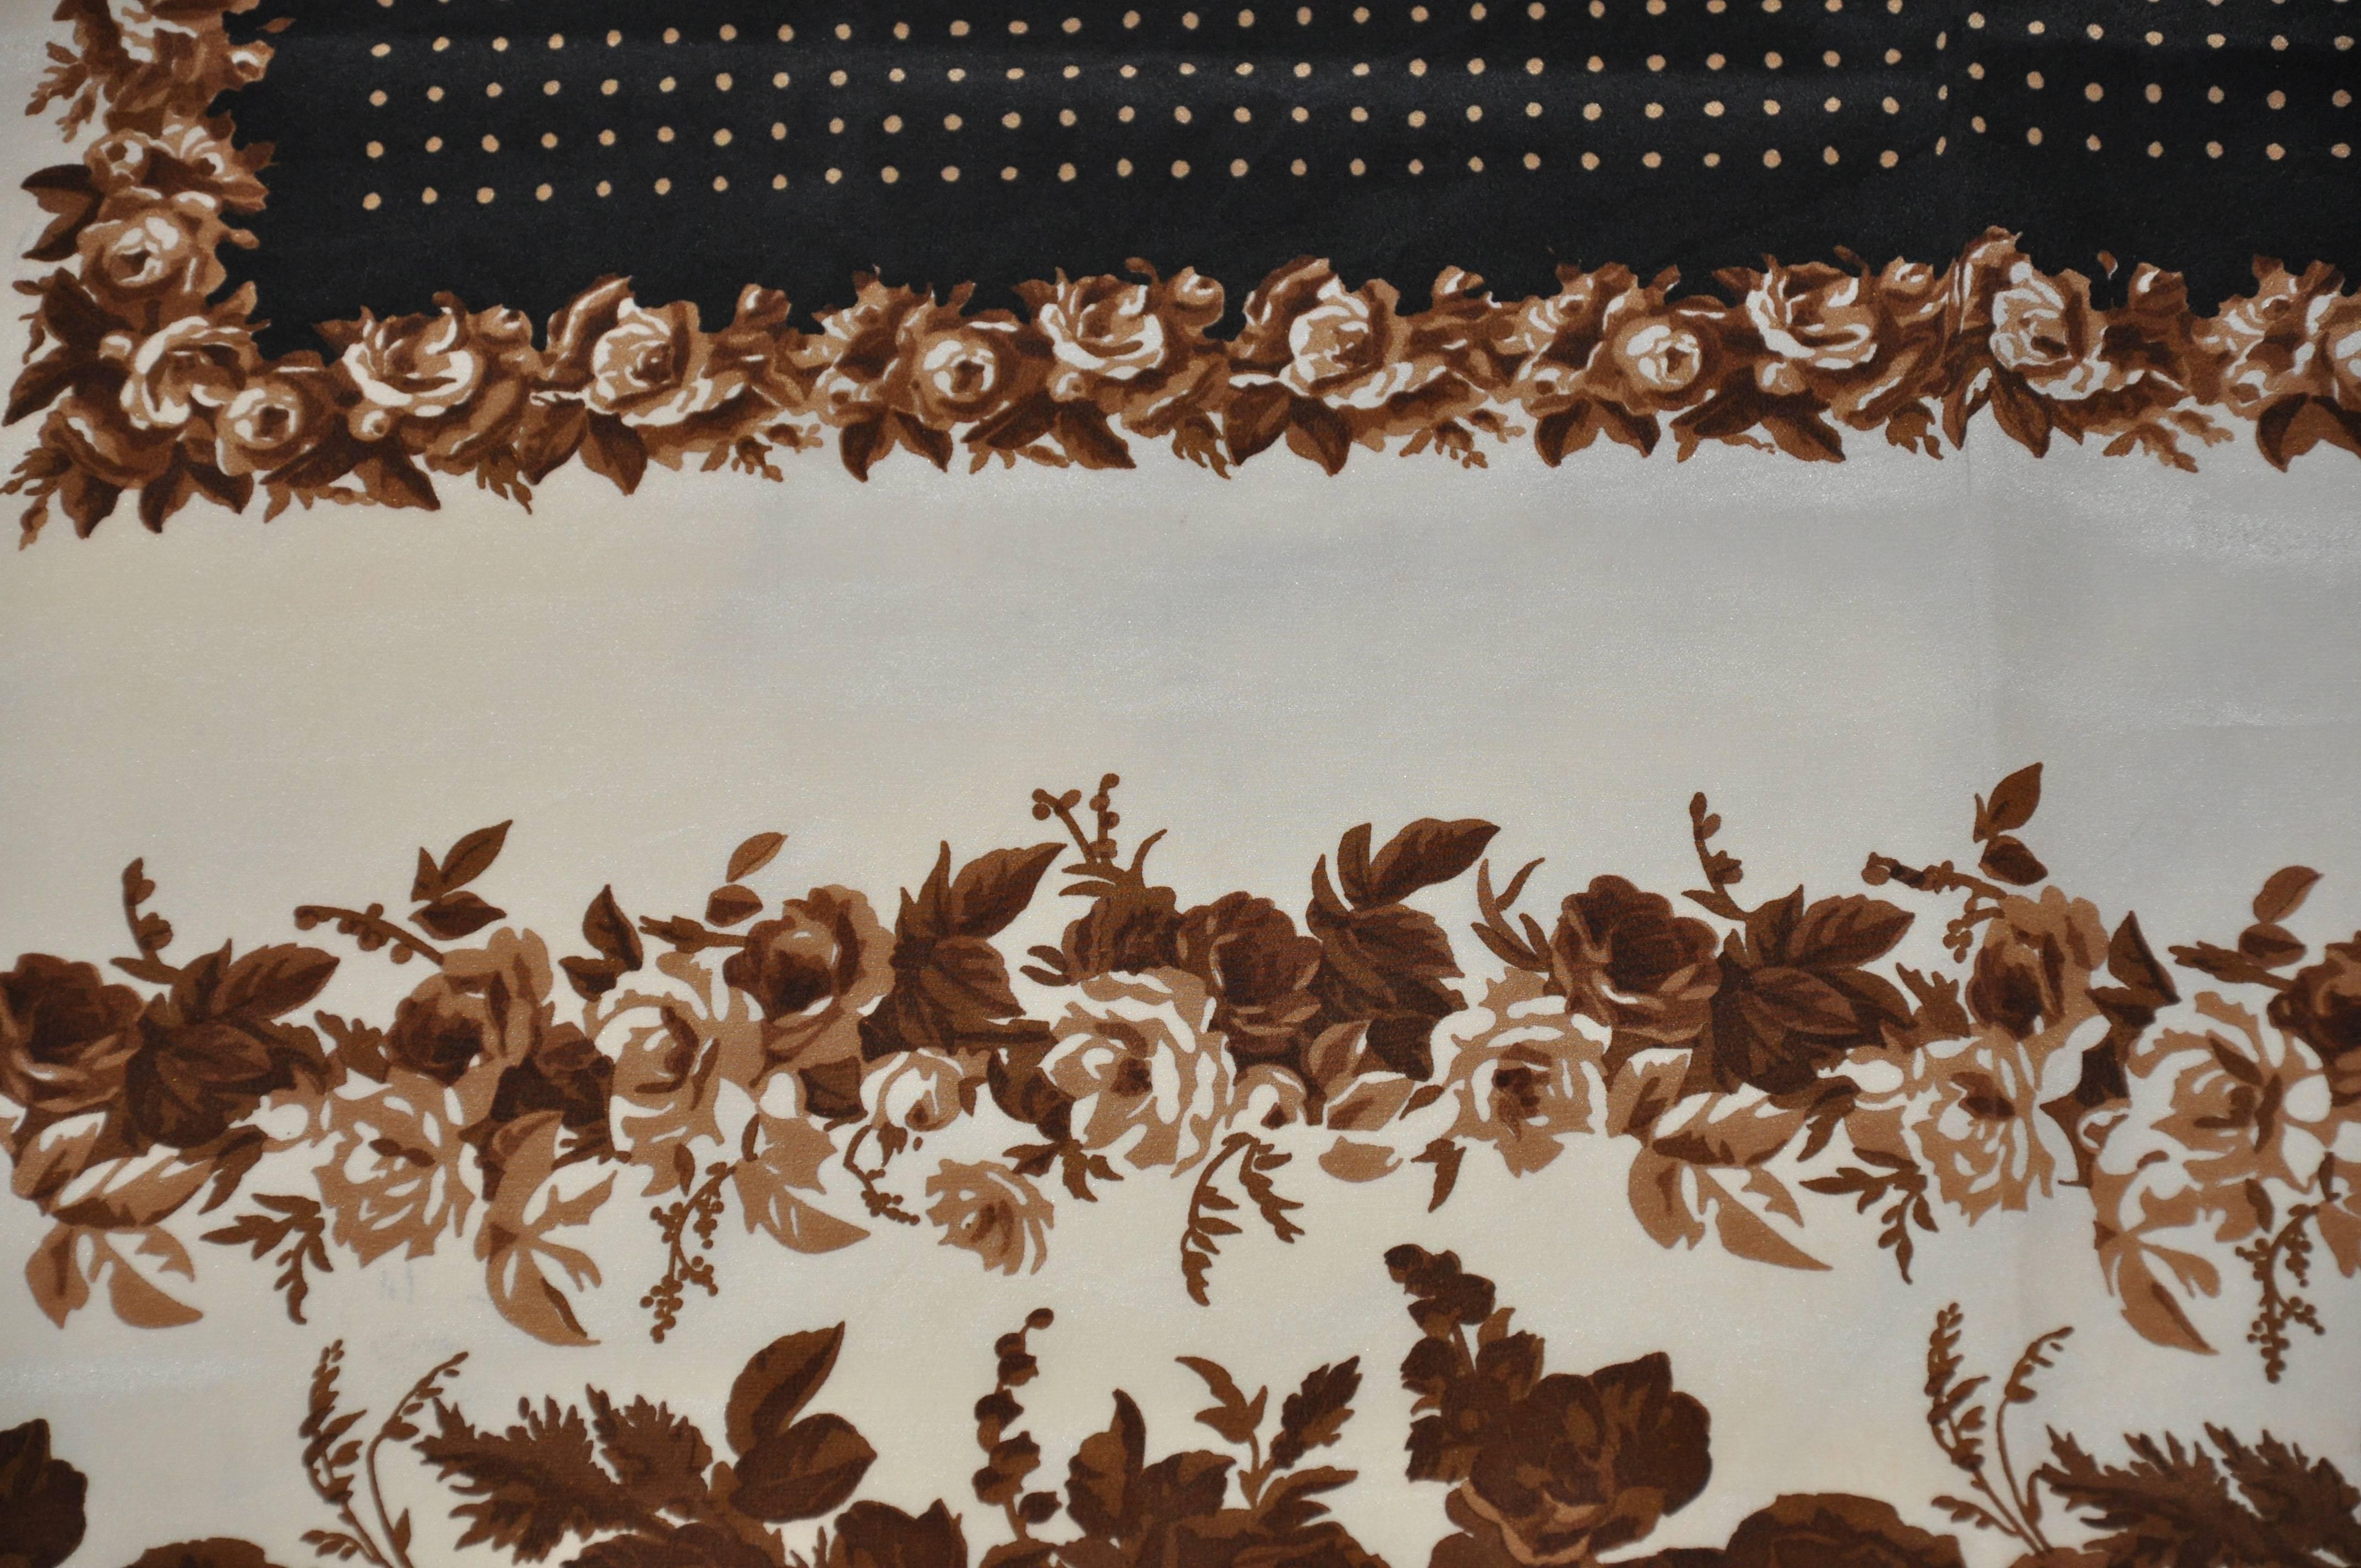 Yves Saint Laurent Huge Polka Dot Center with Brown Floral Border Silk Scarf 1